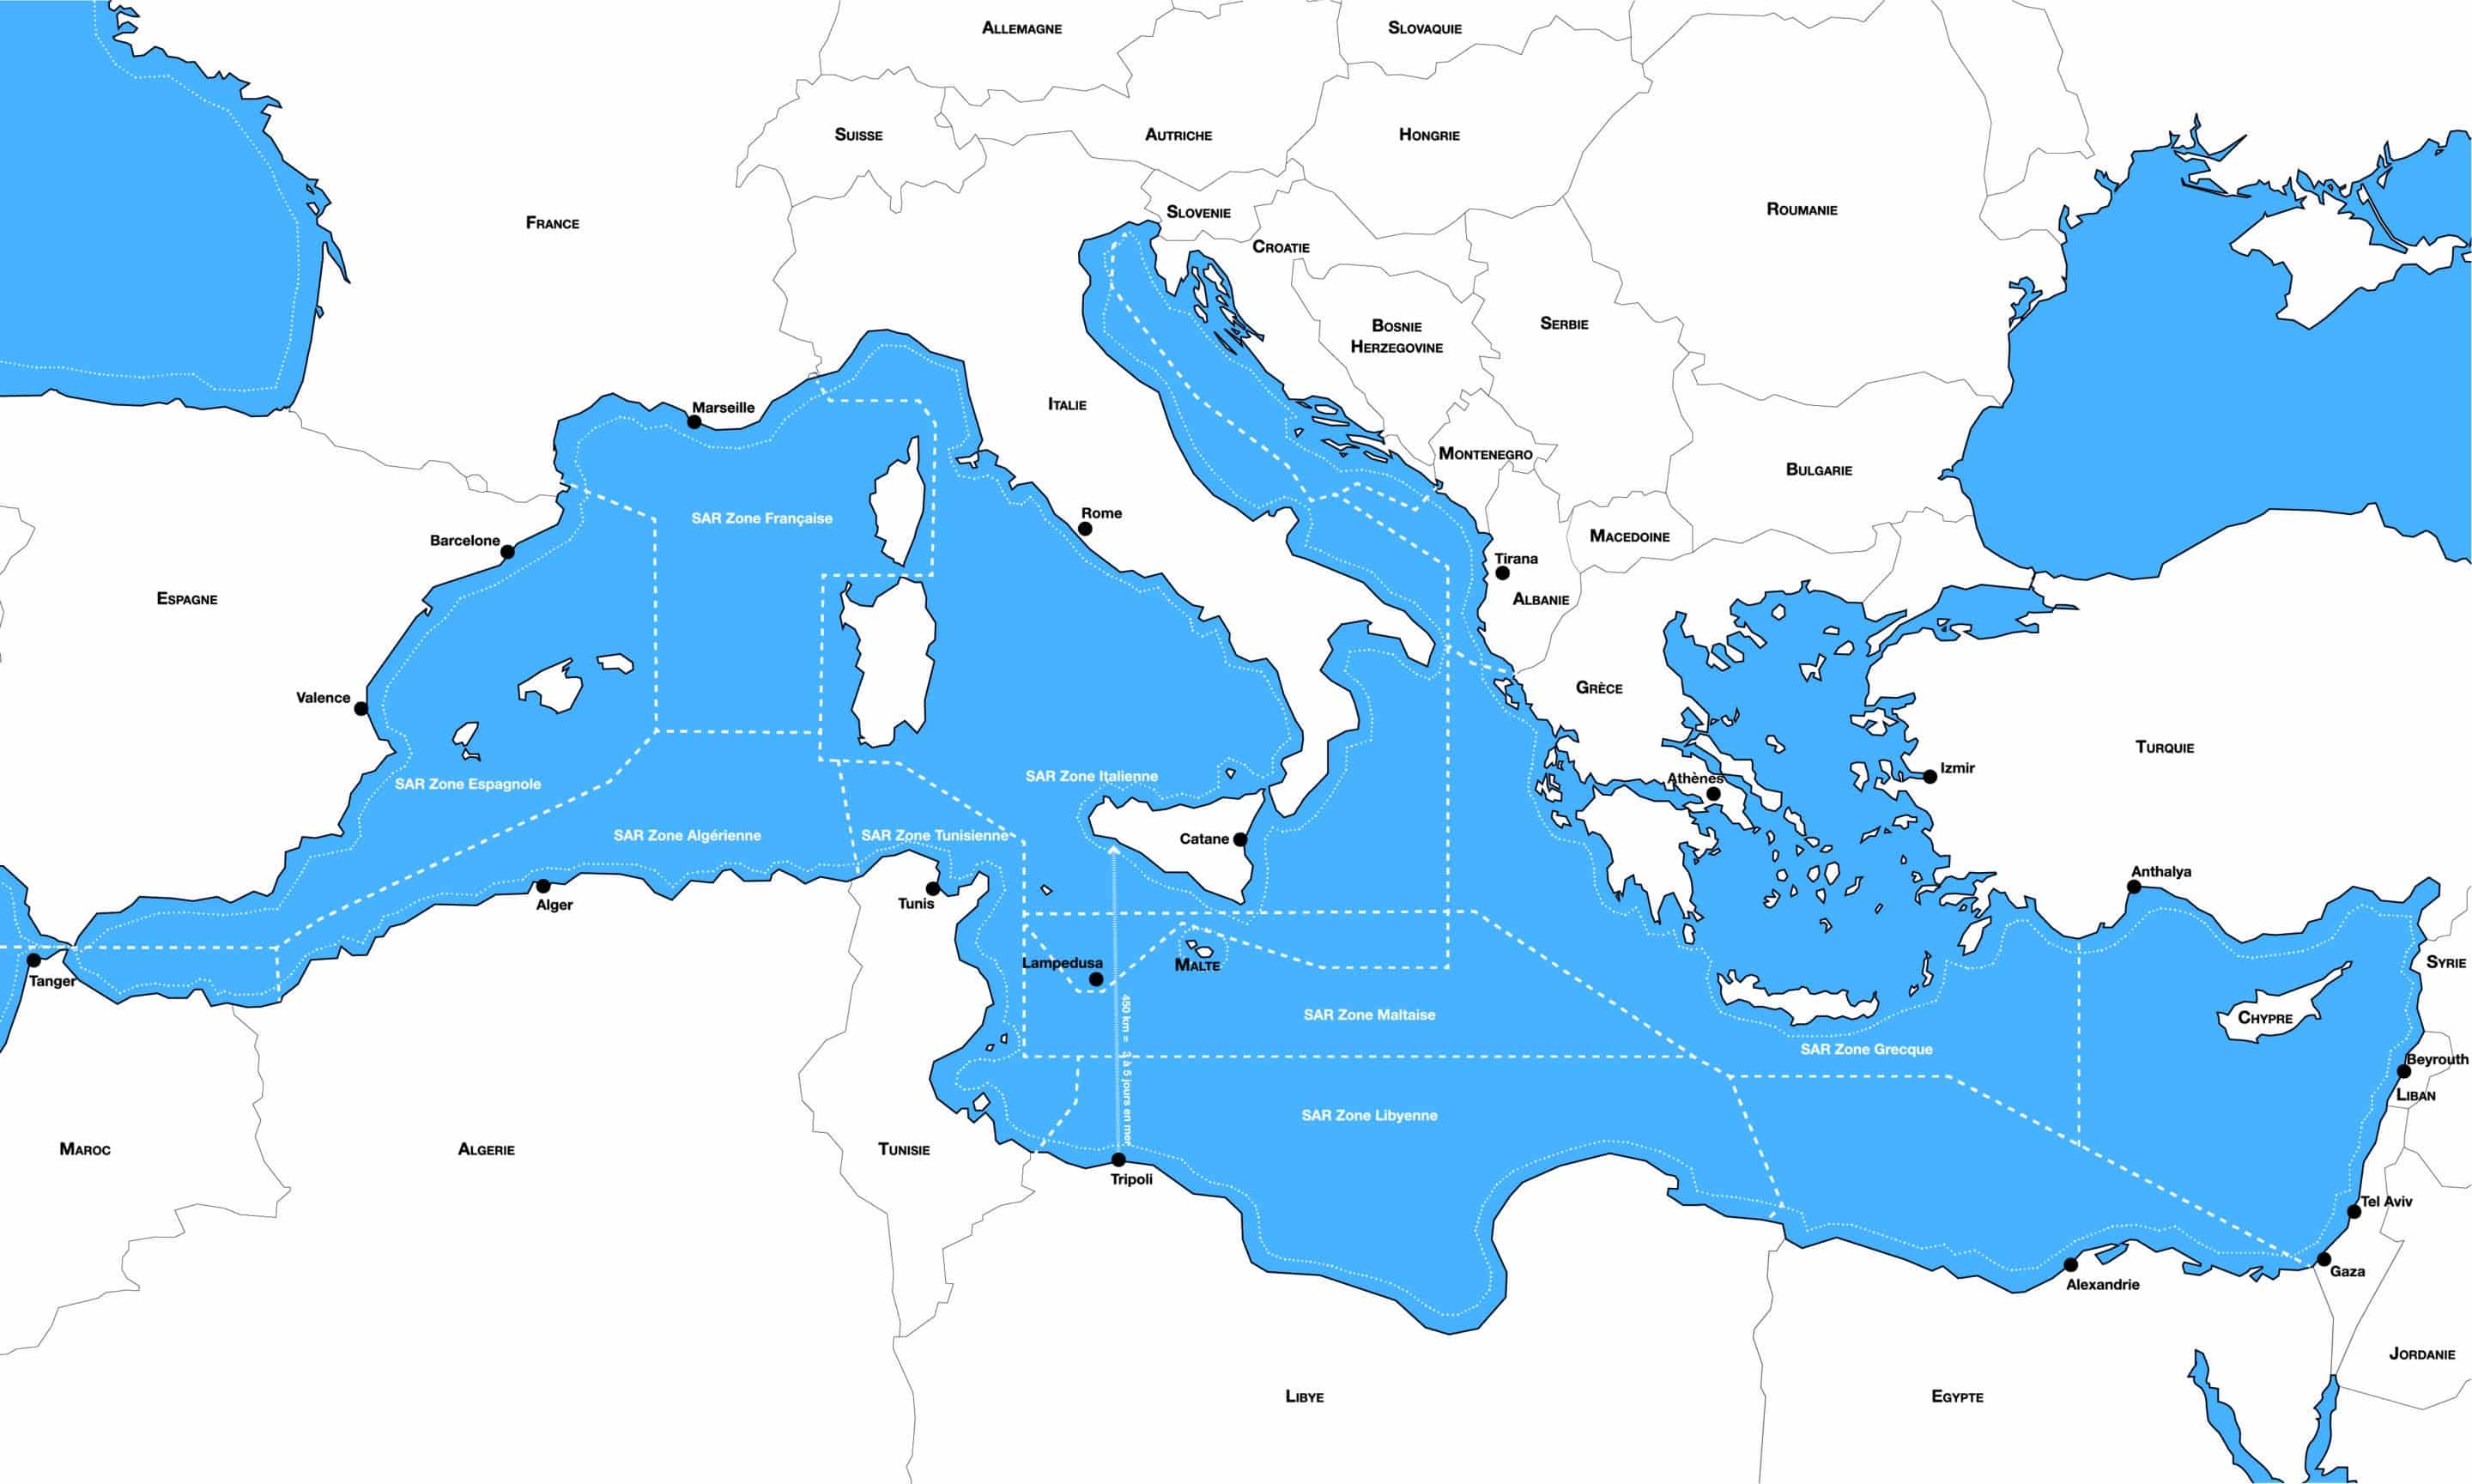 Carte Migration Méditerranée